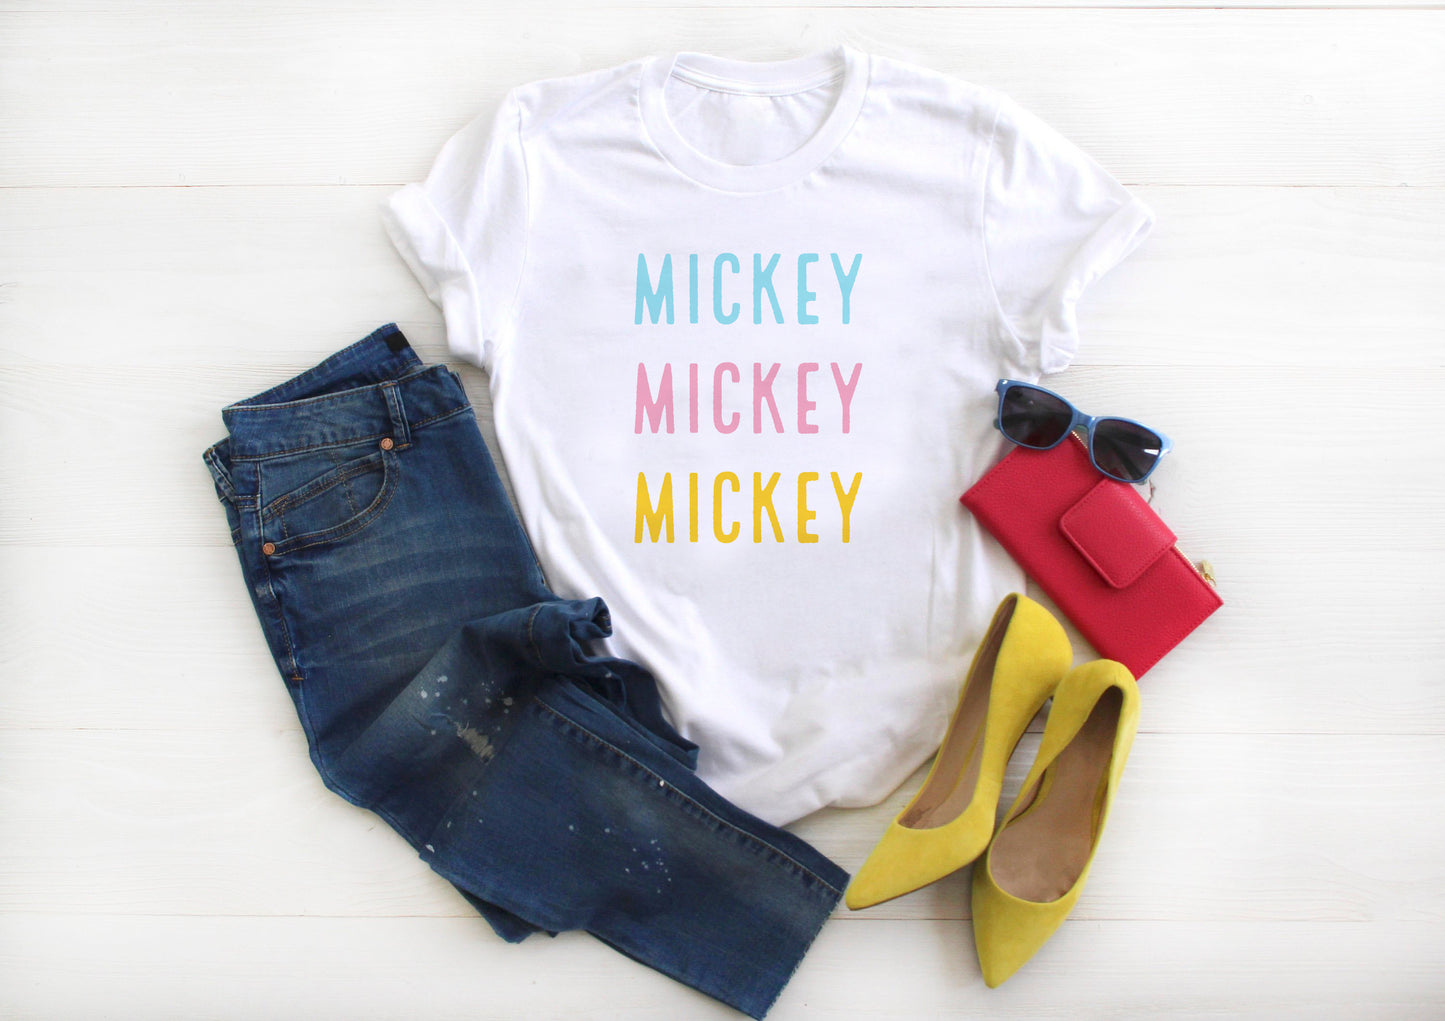 Colorful Mickey Short-Sleeve Unisex T-Shirt - Next Stop Main Street